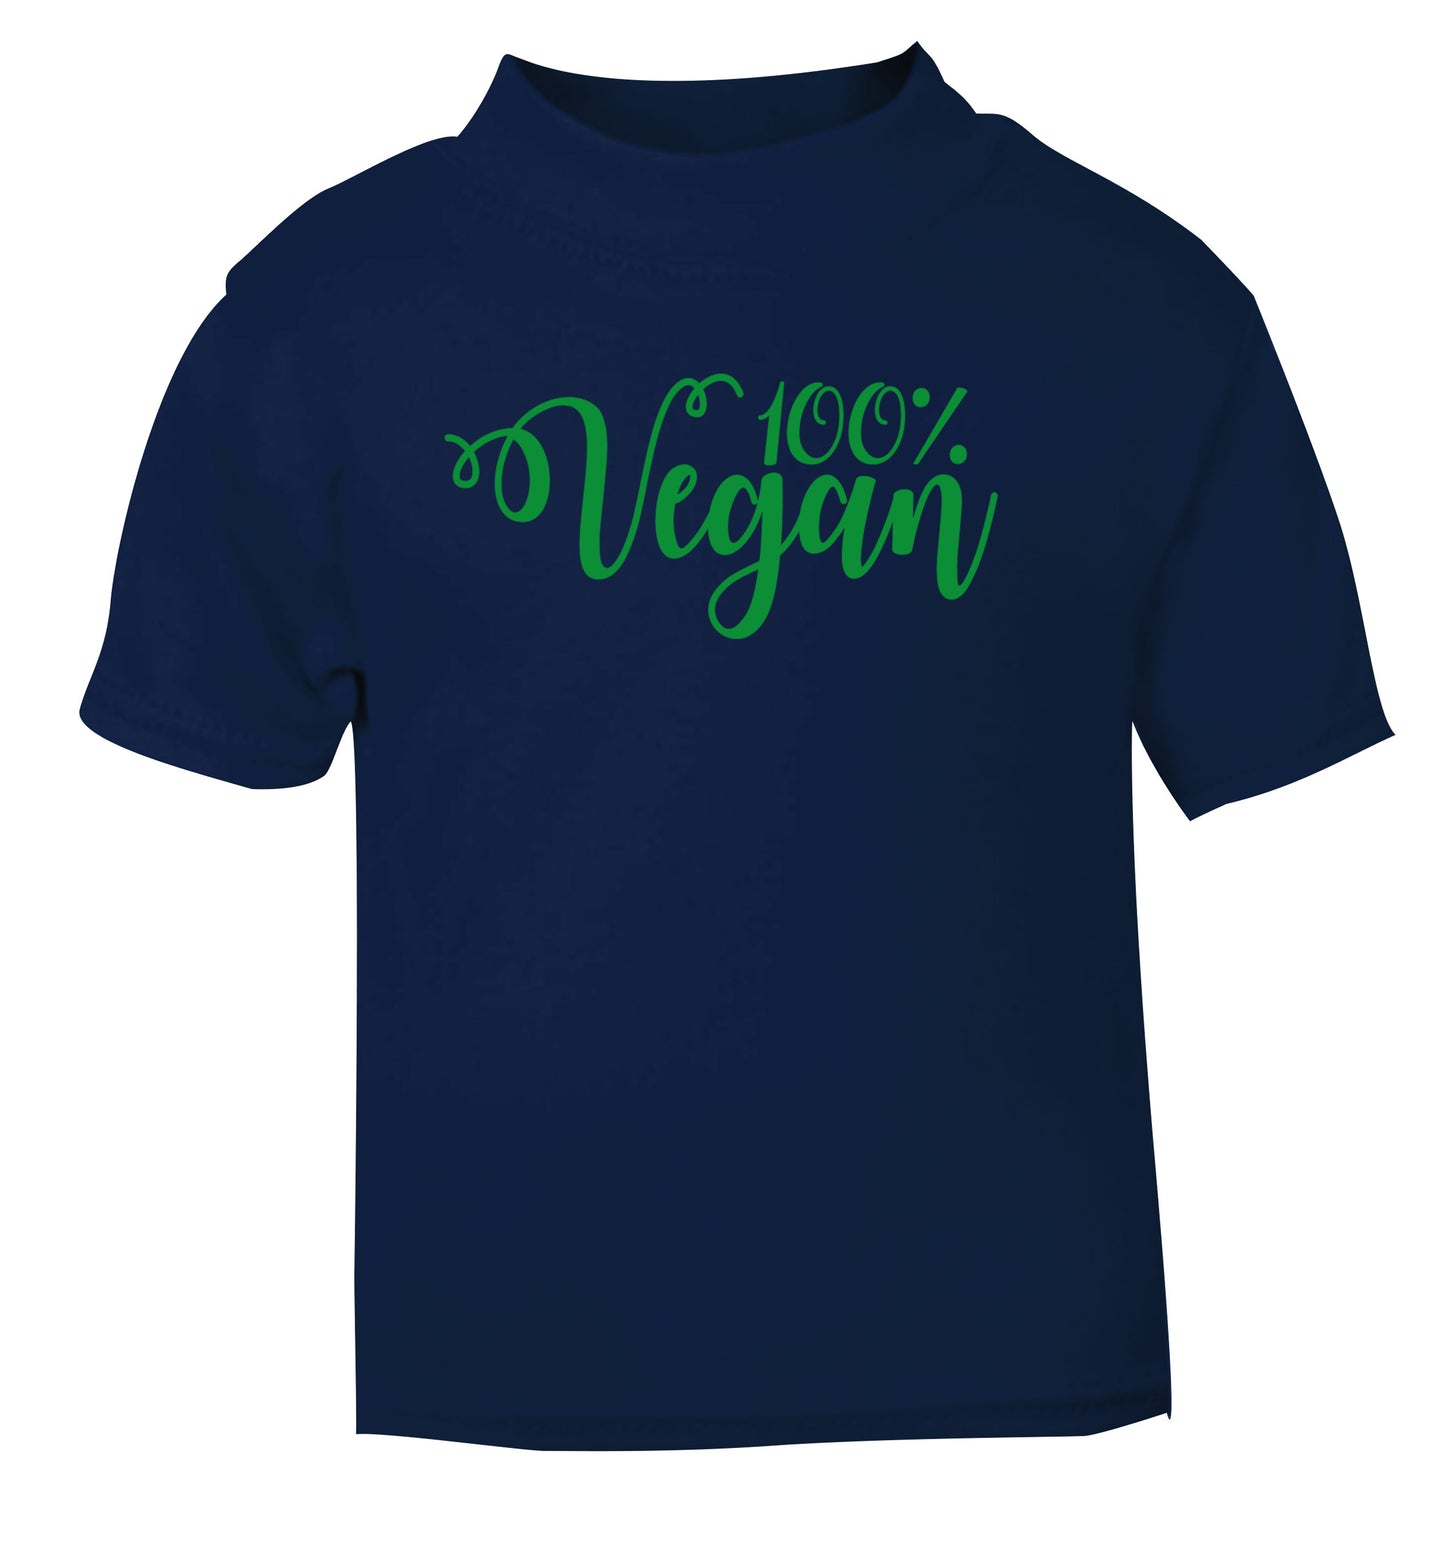 100% Vegan navy Baby Toddler Tshirt 2 Years